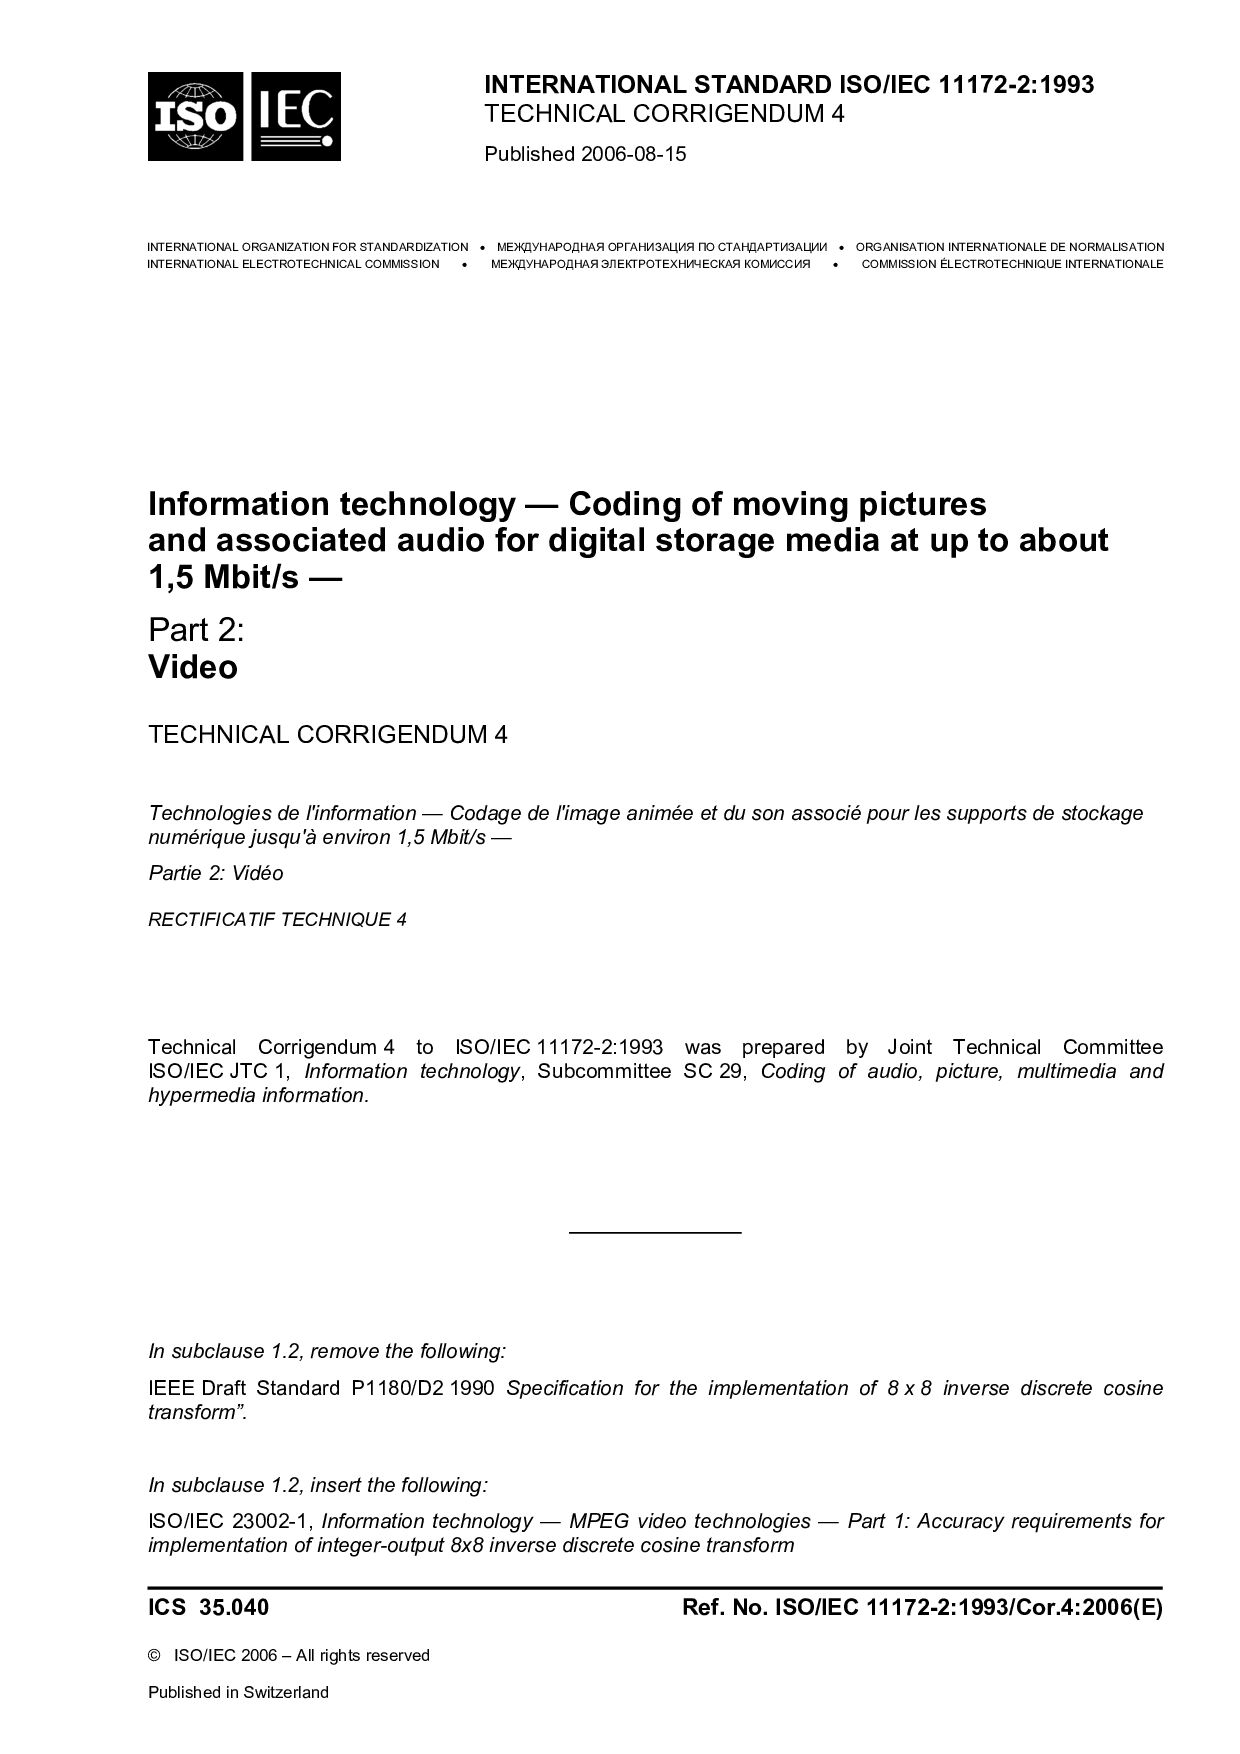 ISO/IEC 11172-2:1993/Cor 4:2006